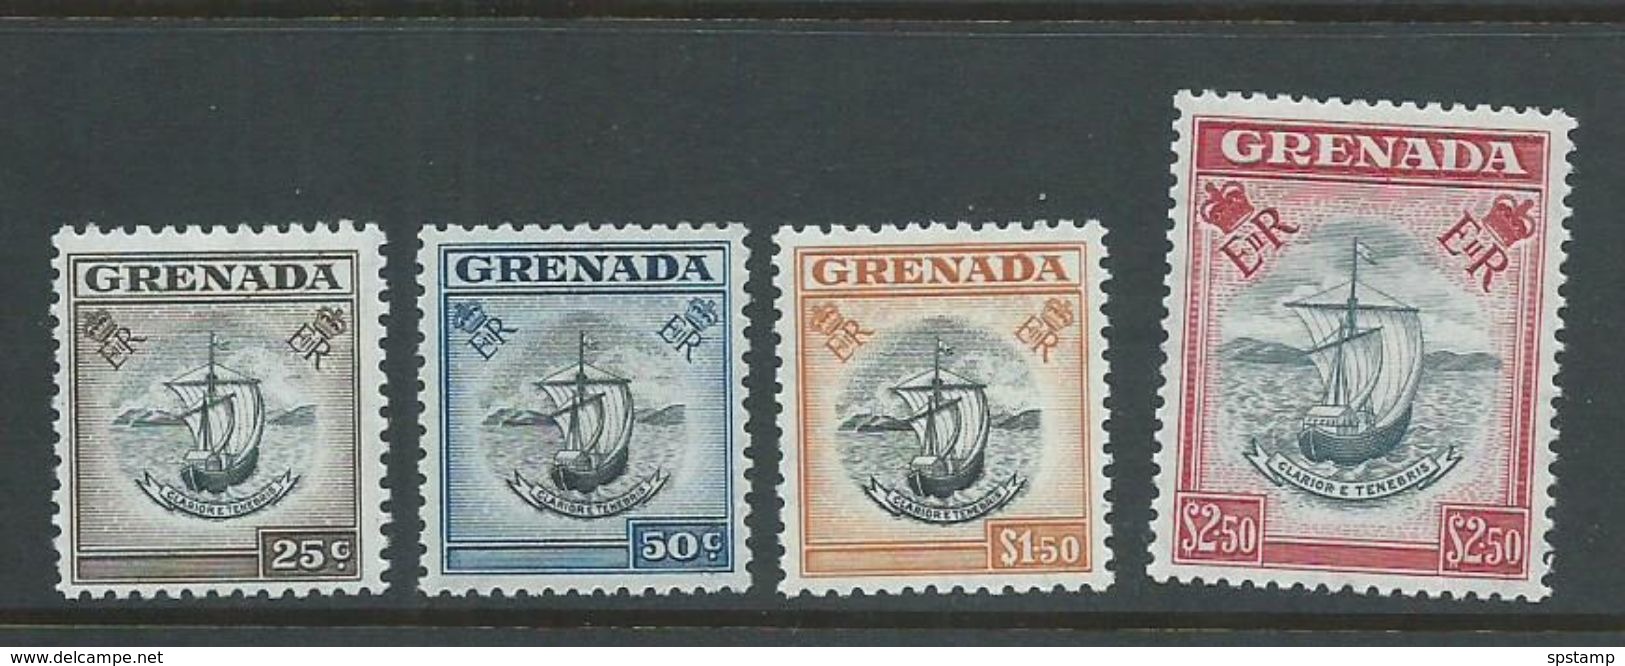 Grenada 1953 QEII Definitives 25c -> $2.50 Boat Seal Of Colony Singles (4) MNH - Grenada (...-1974)